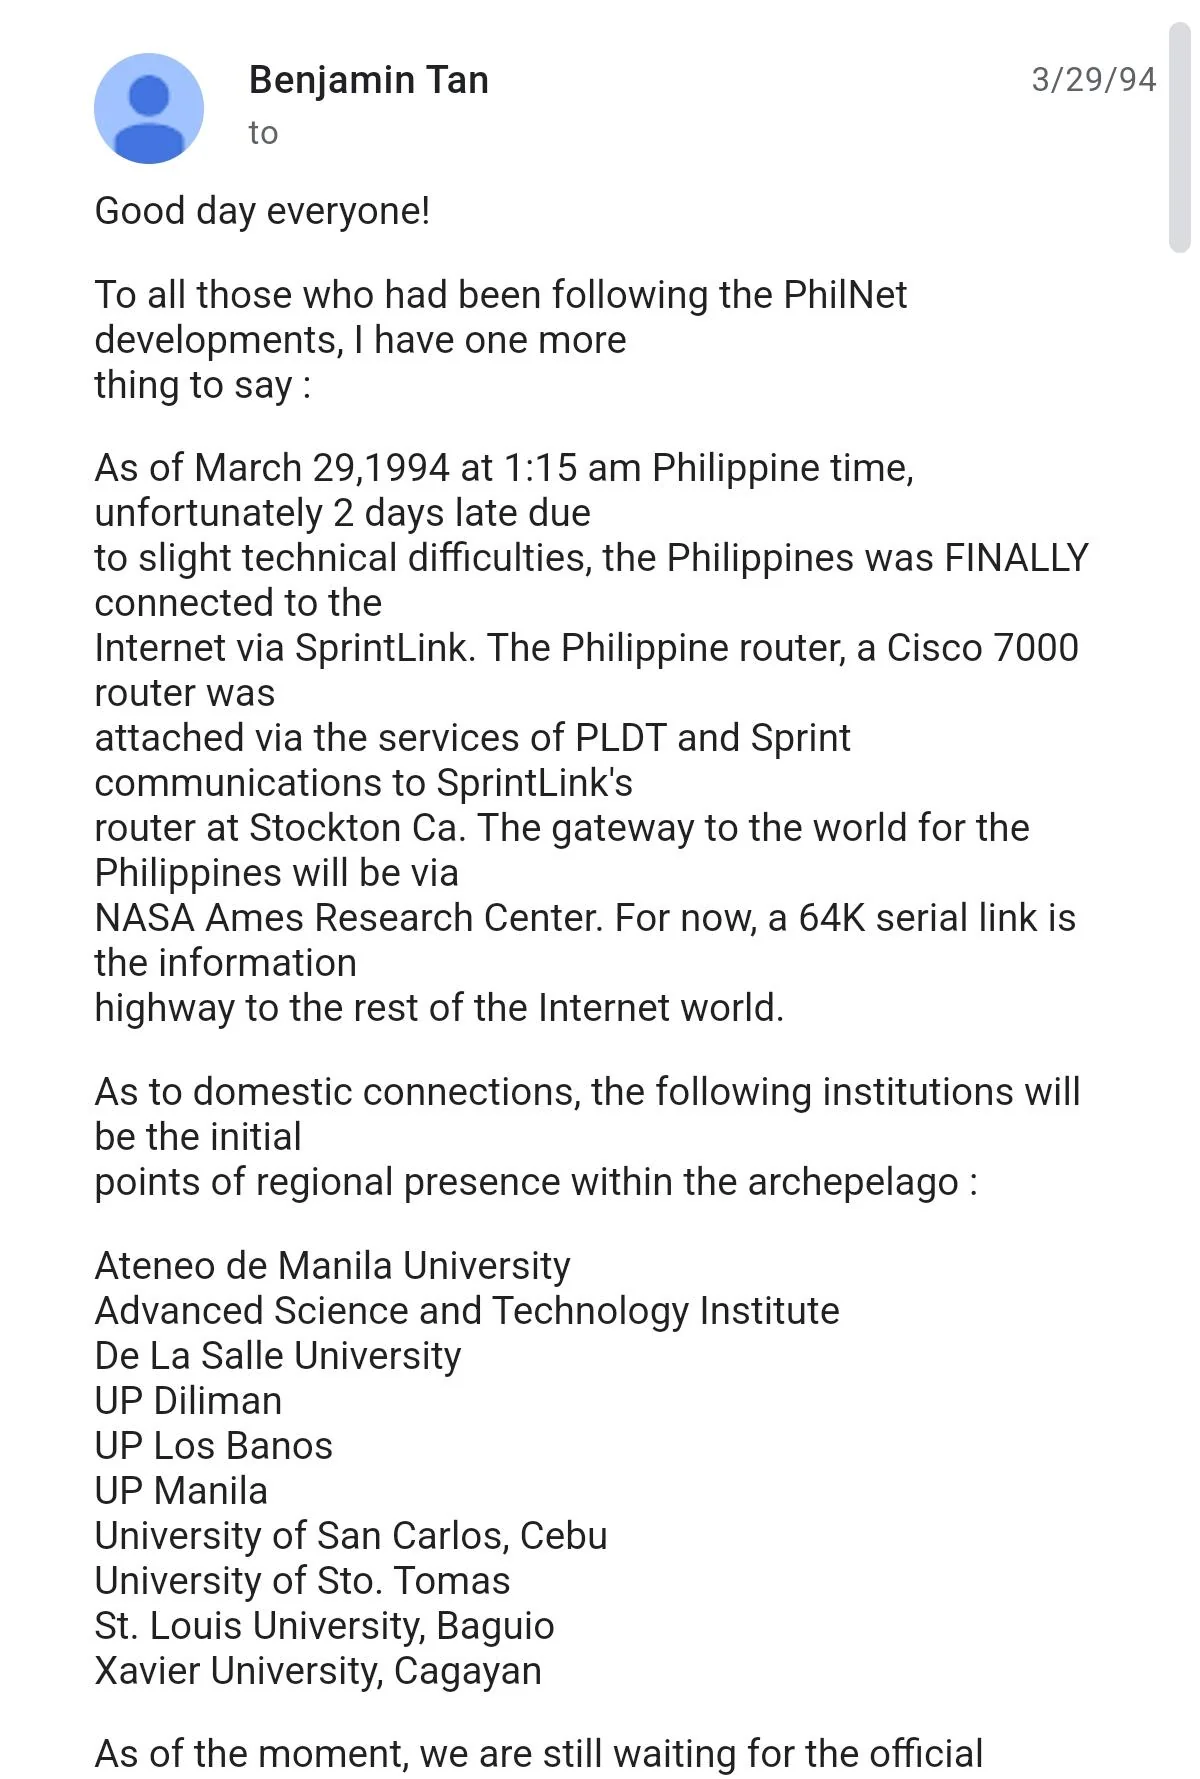 Benjamin Tan&rsquo;s email on PhilNet developments